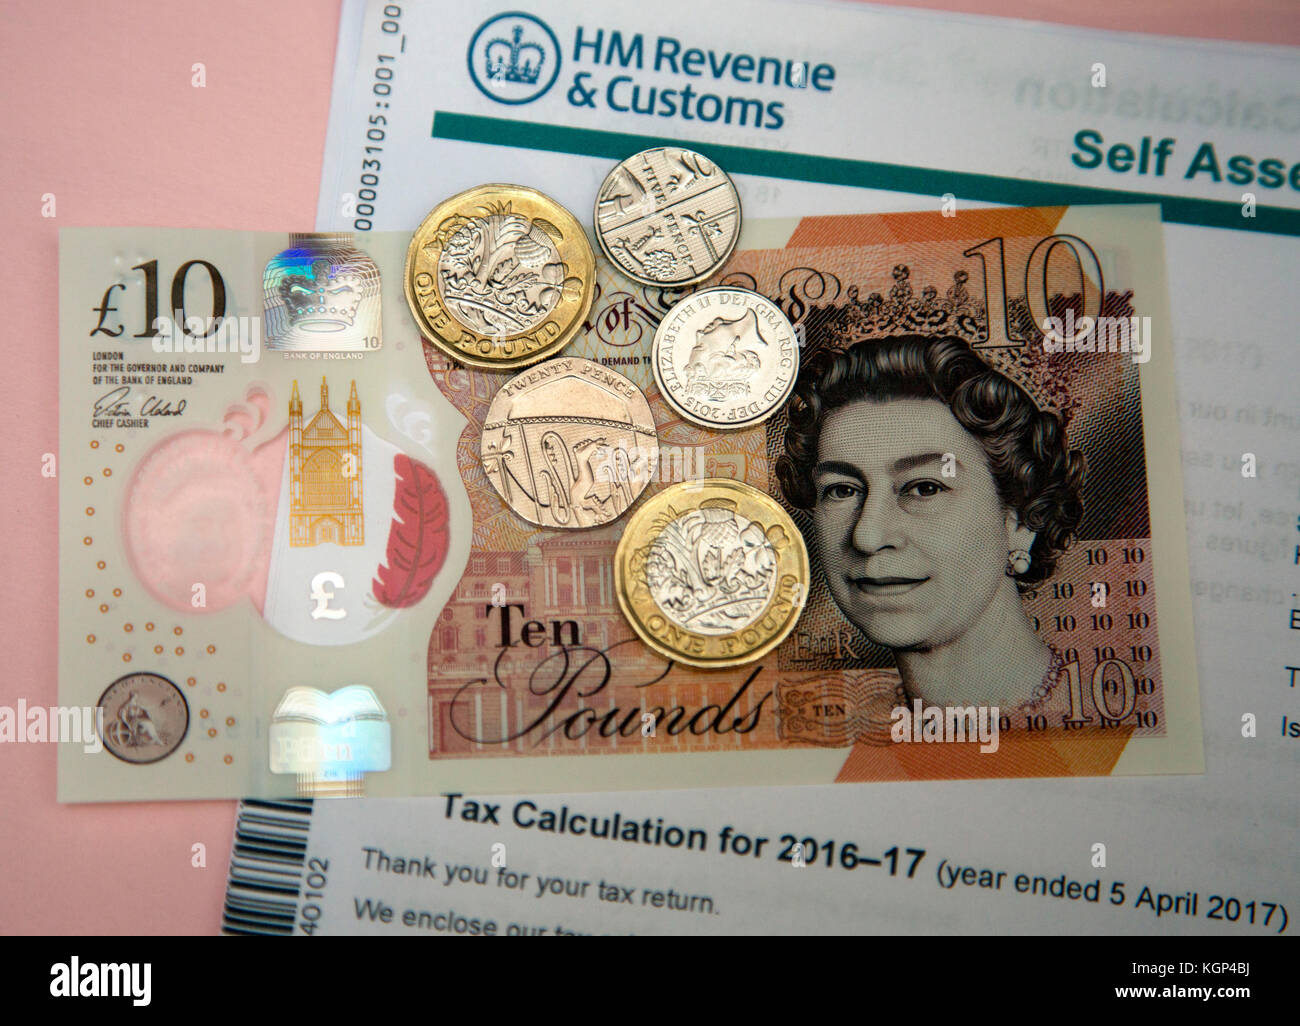 Income Tax demand from HM Revenue & Customs, London Stock Photo